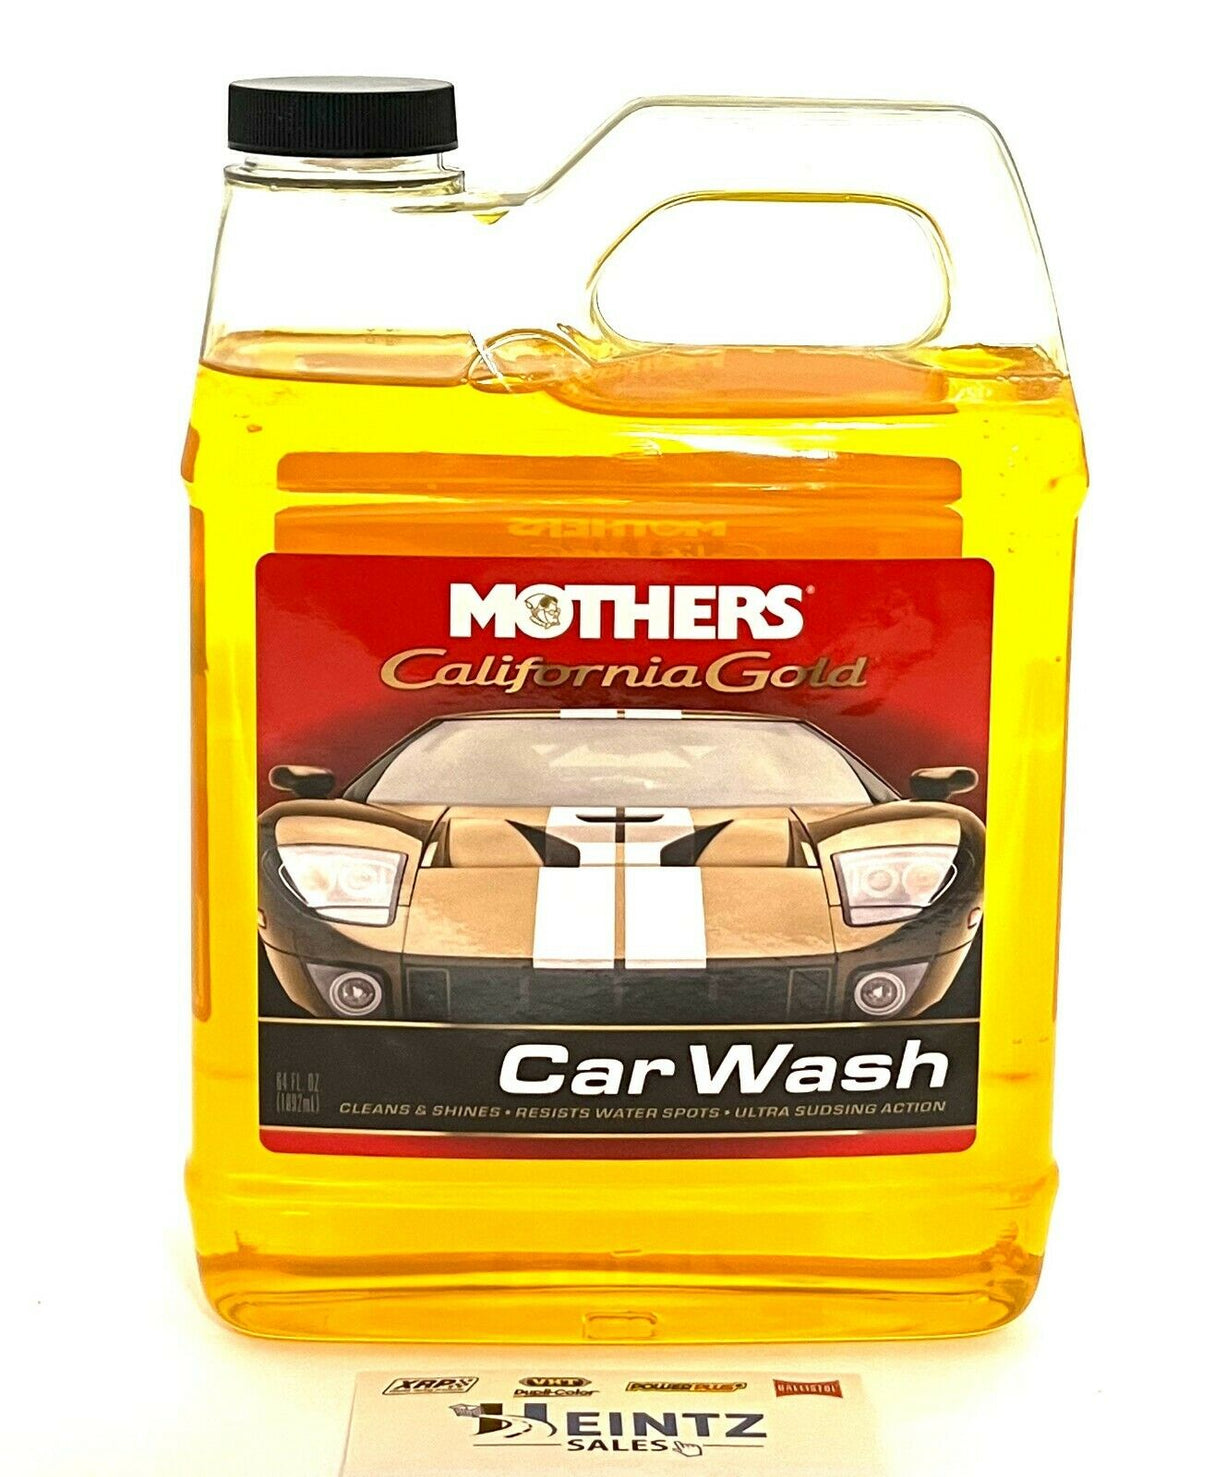 Meguiar's Car Wash 64oz Bottle Only $4 Shipped on